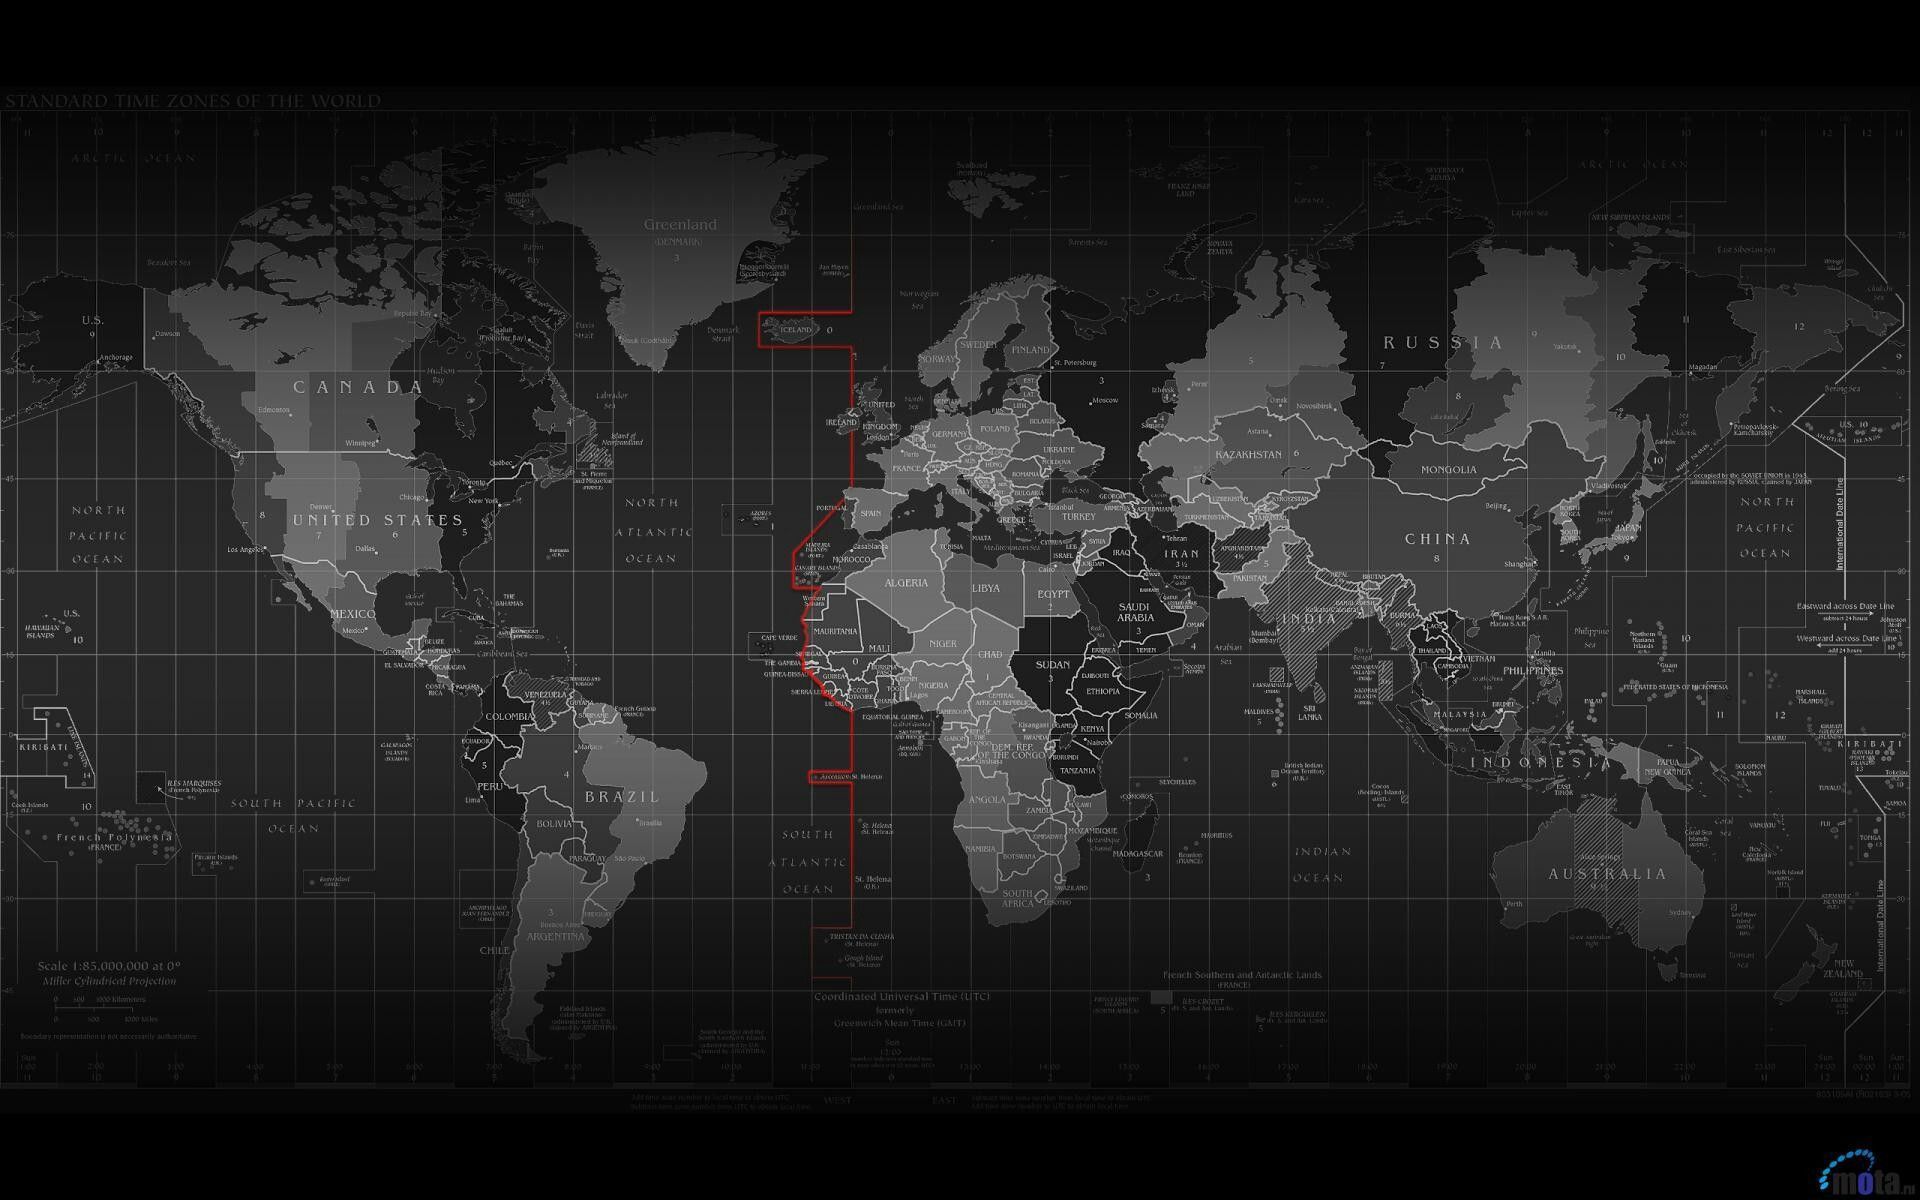 iptv provider world wide. World map wallpaper, World wallpaper, Cool world map